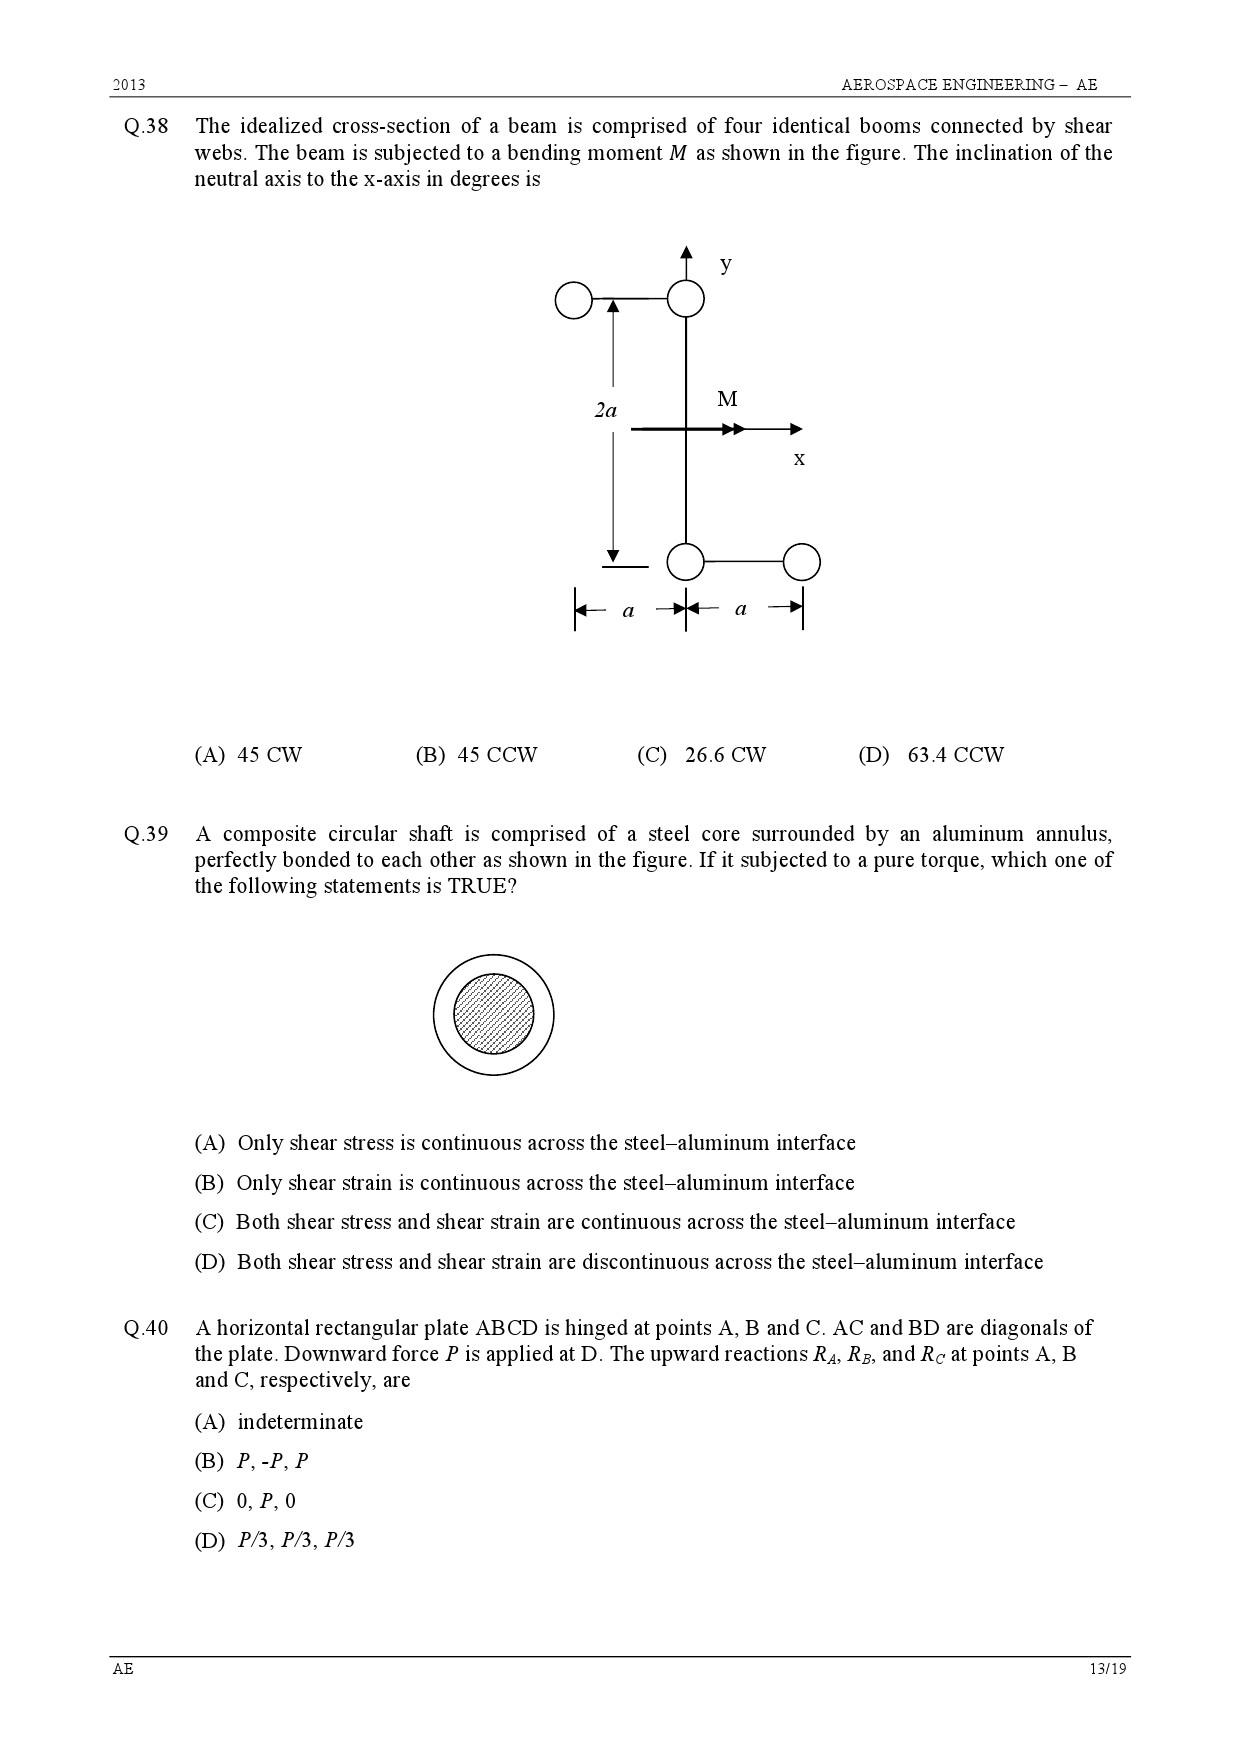 GATE Exam 2013 Aerospace Engineering Question Paper 13